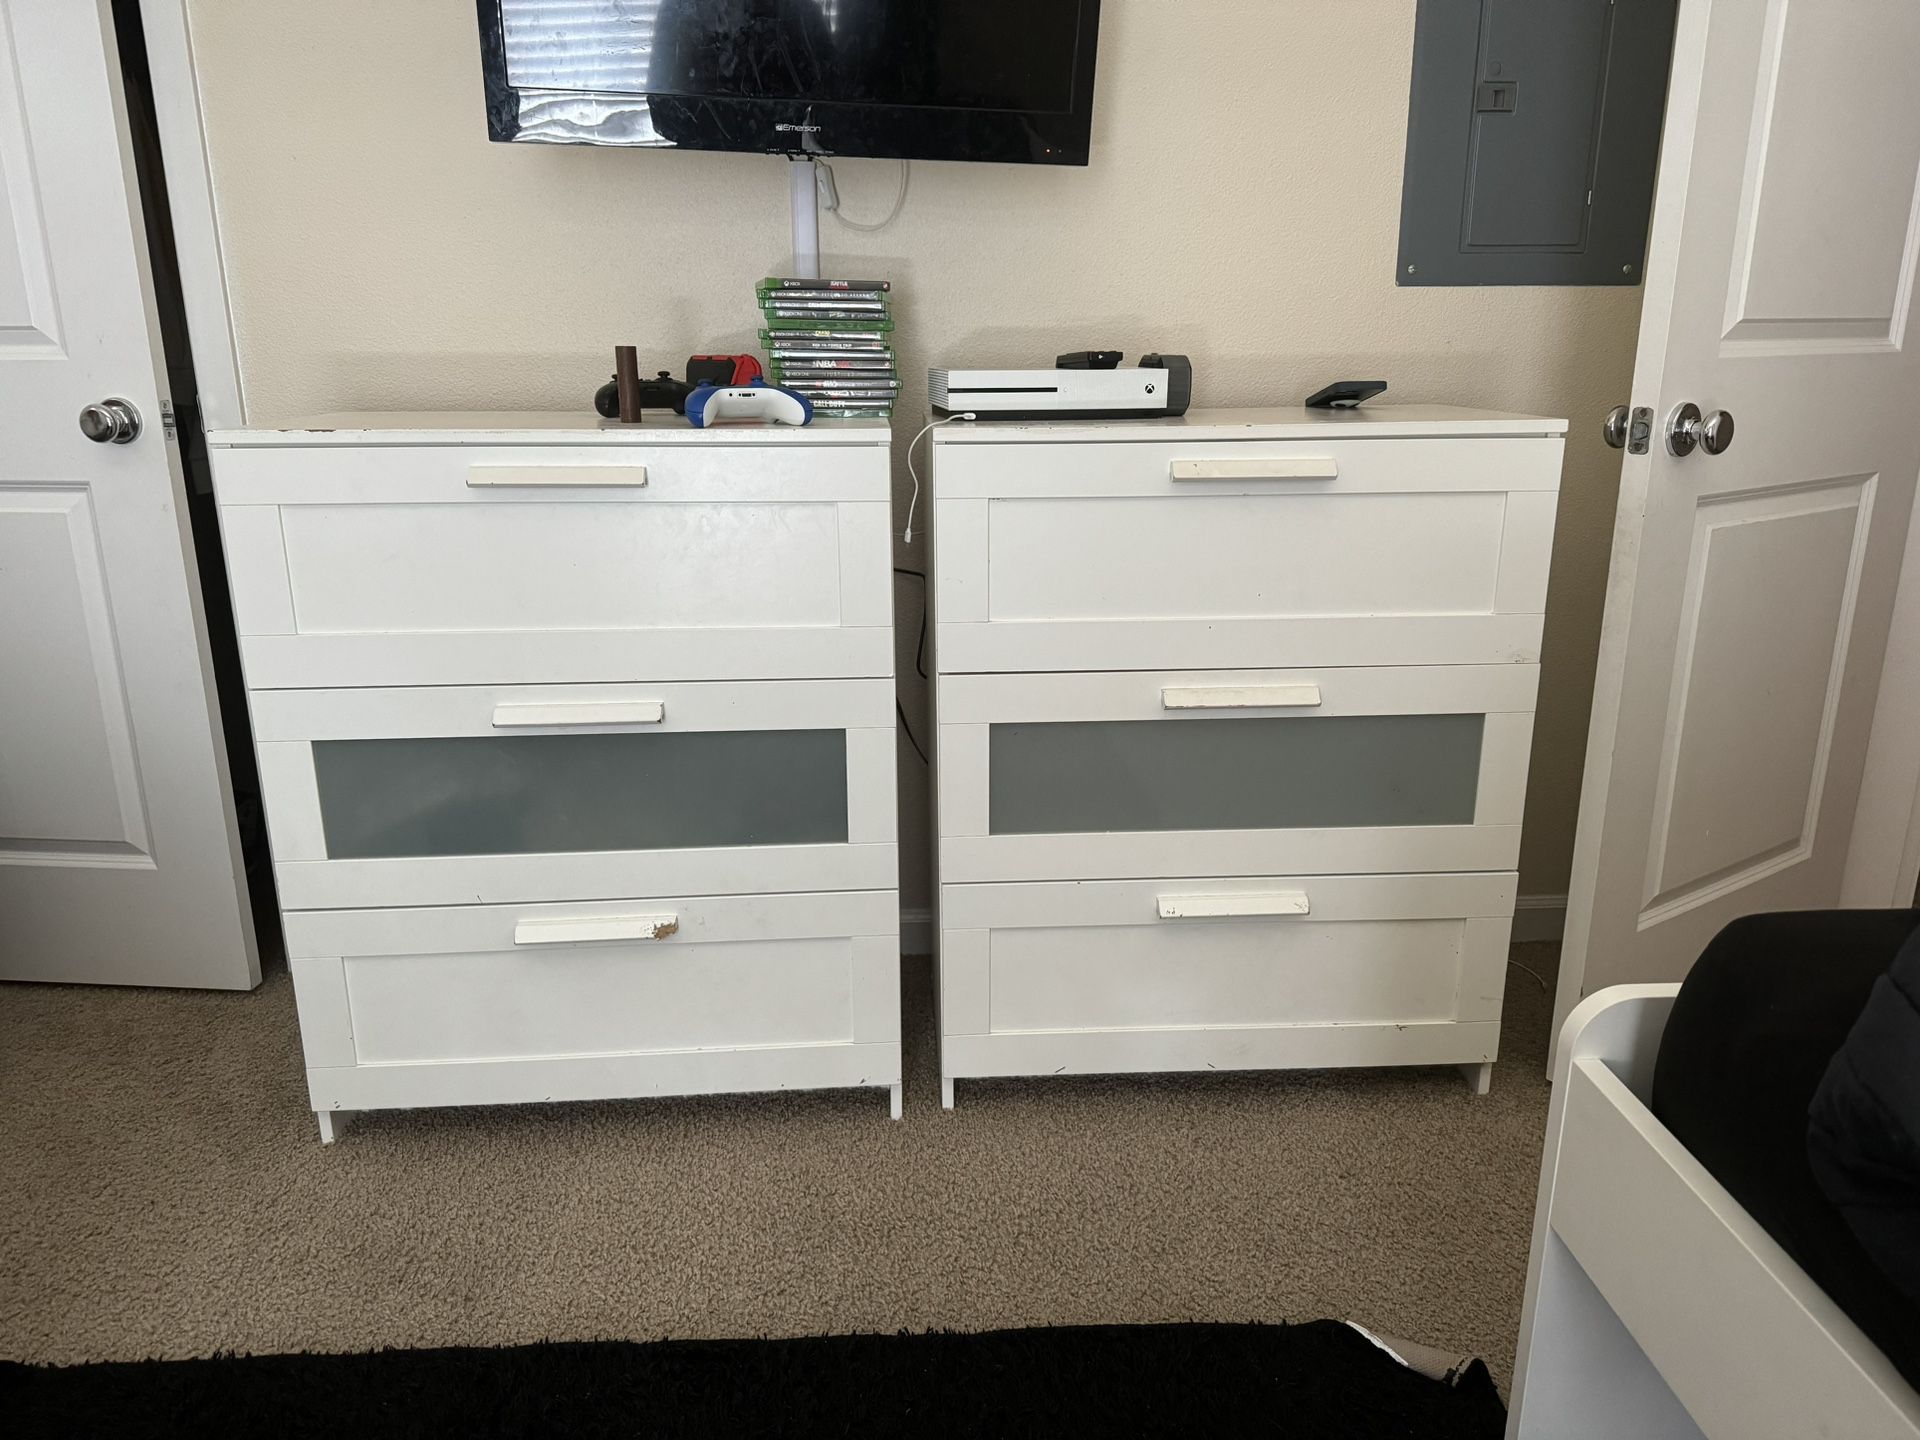 2 3-drawer IKEA Dressers